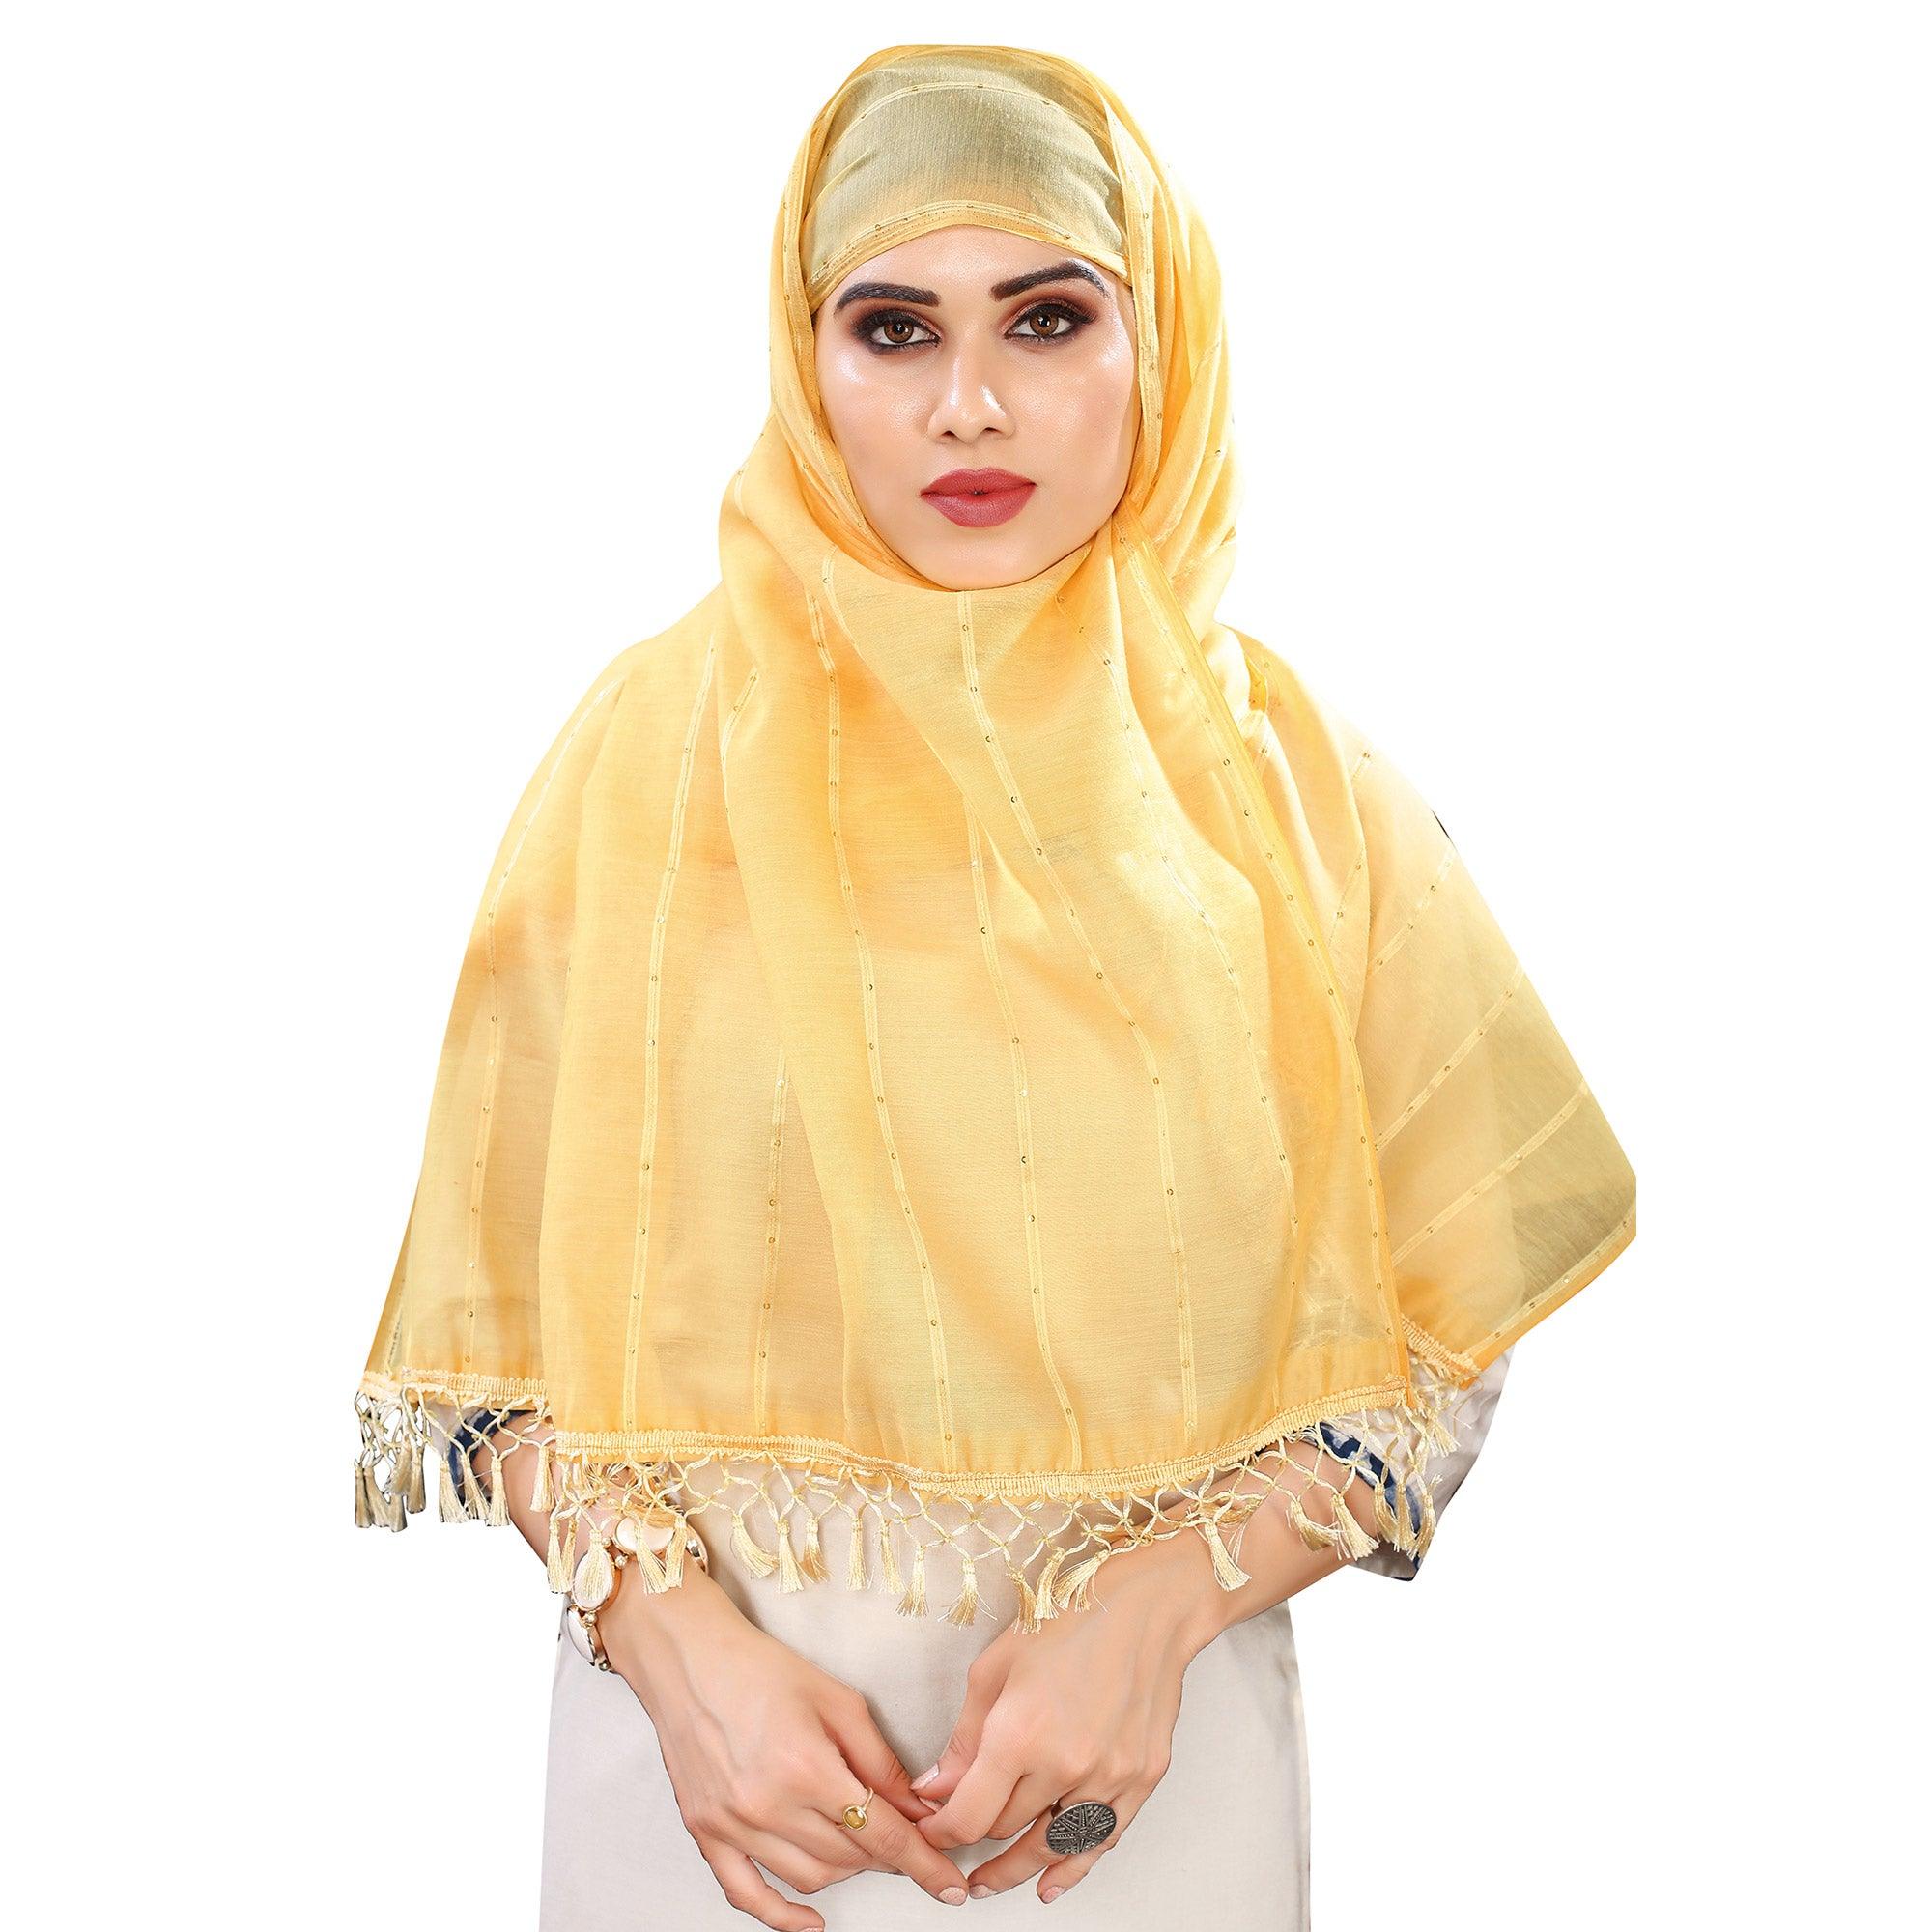 Yellow Stripes Woven Sequence Festive Wear Cotton Silk Dupatta - Peachmode